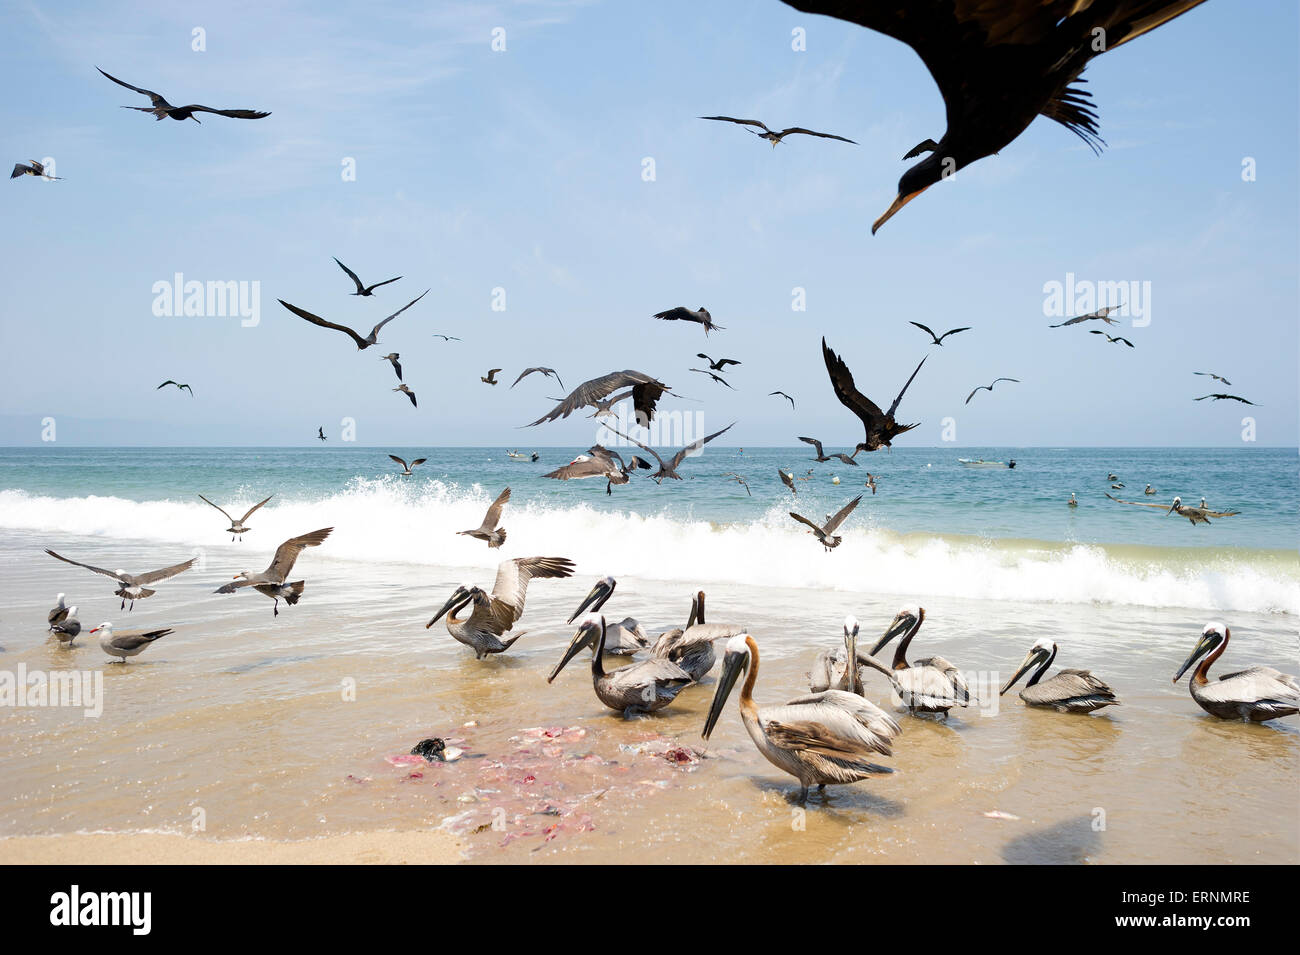 Birds feeding on the beach. Stock Photo